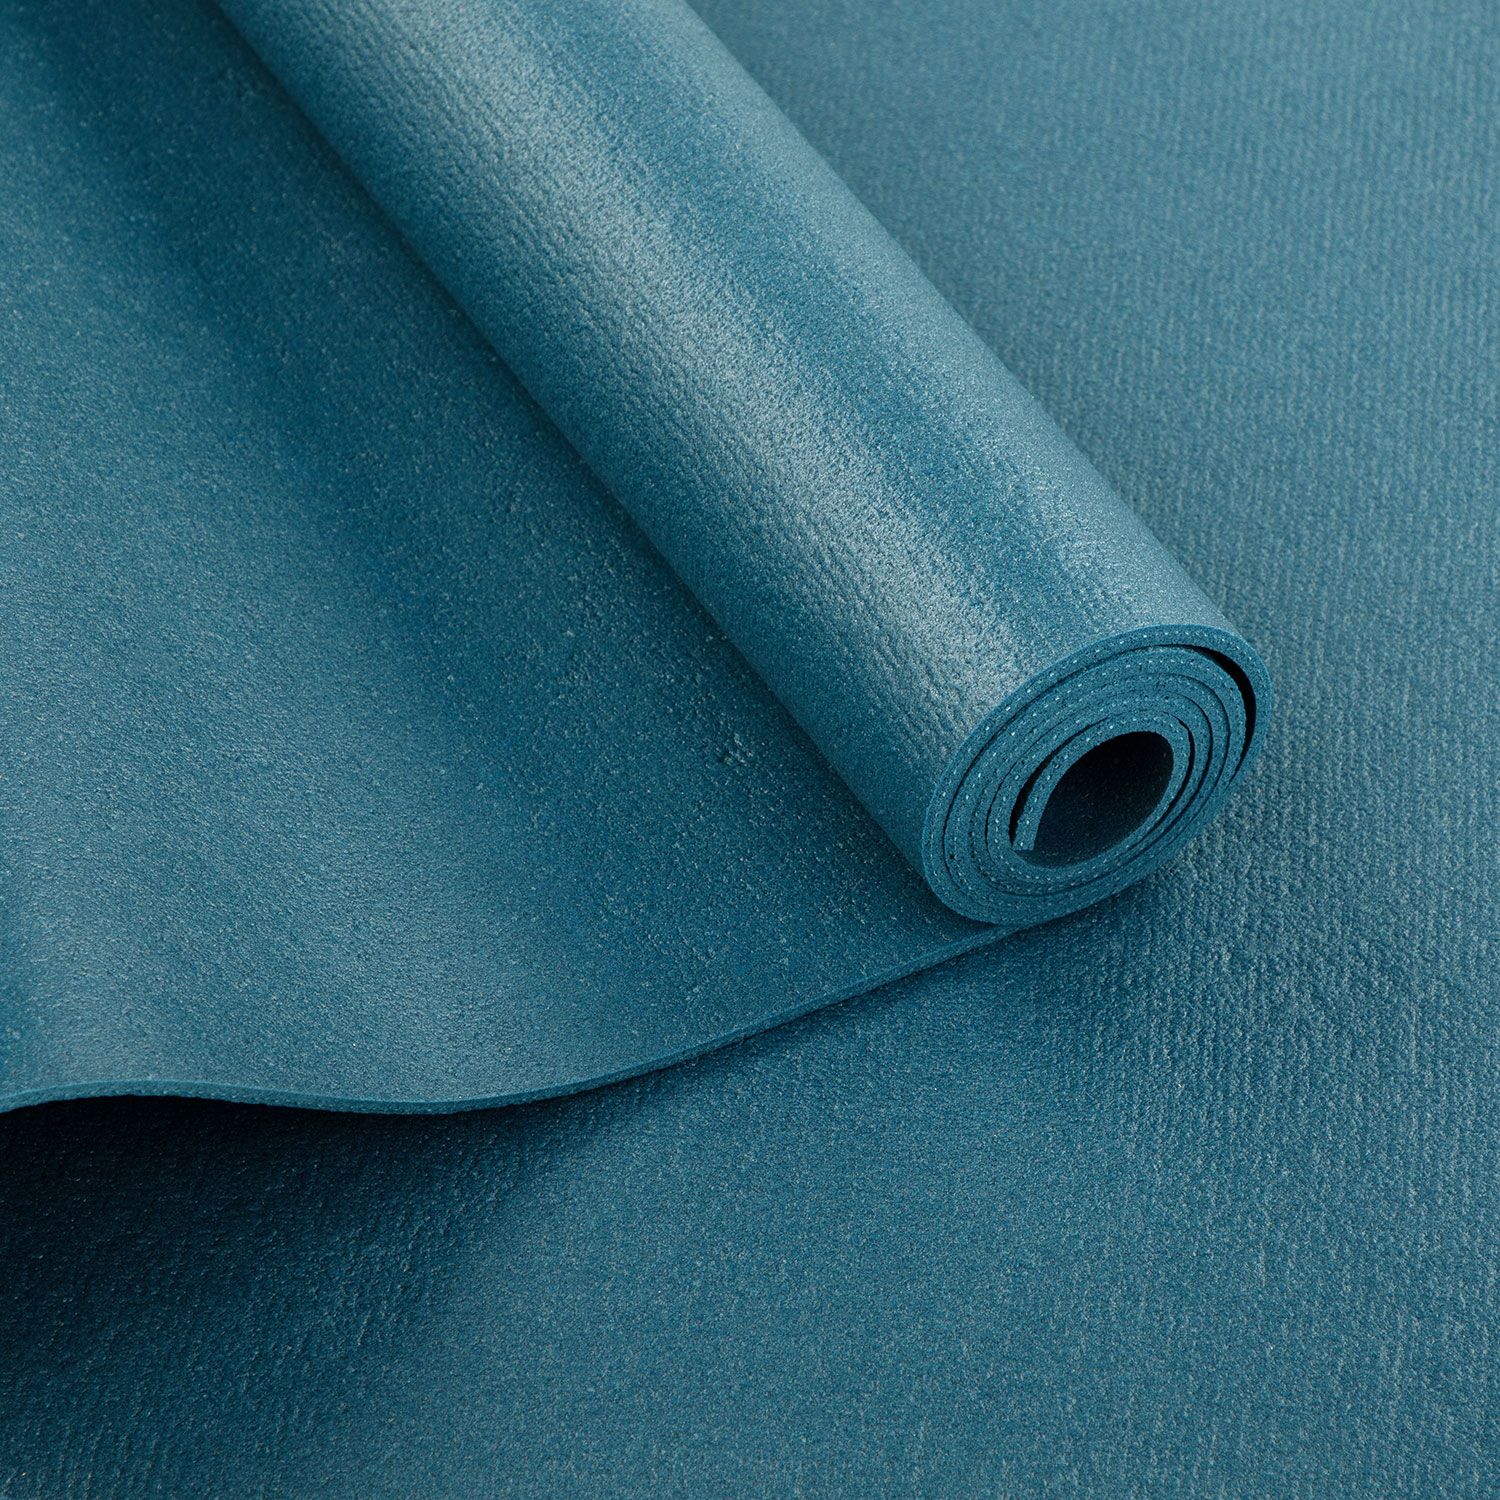 Rishikesh Premium 60 XL, PVC blau 682-B